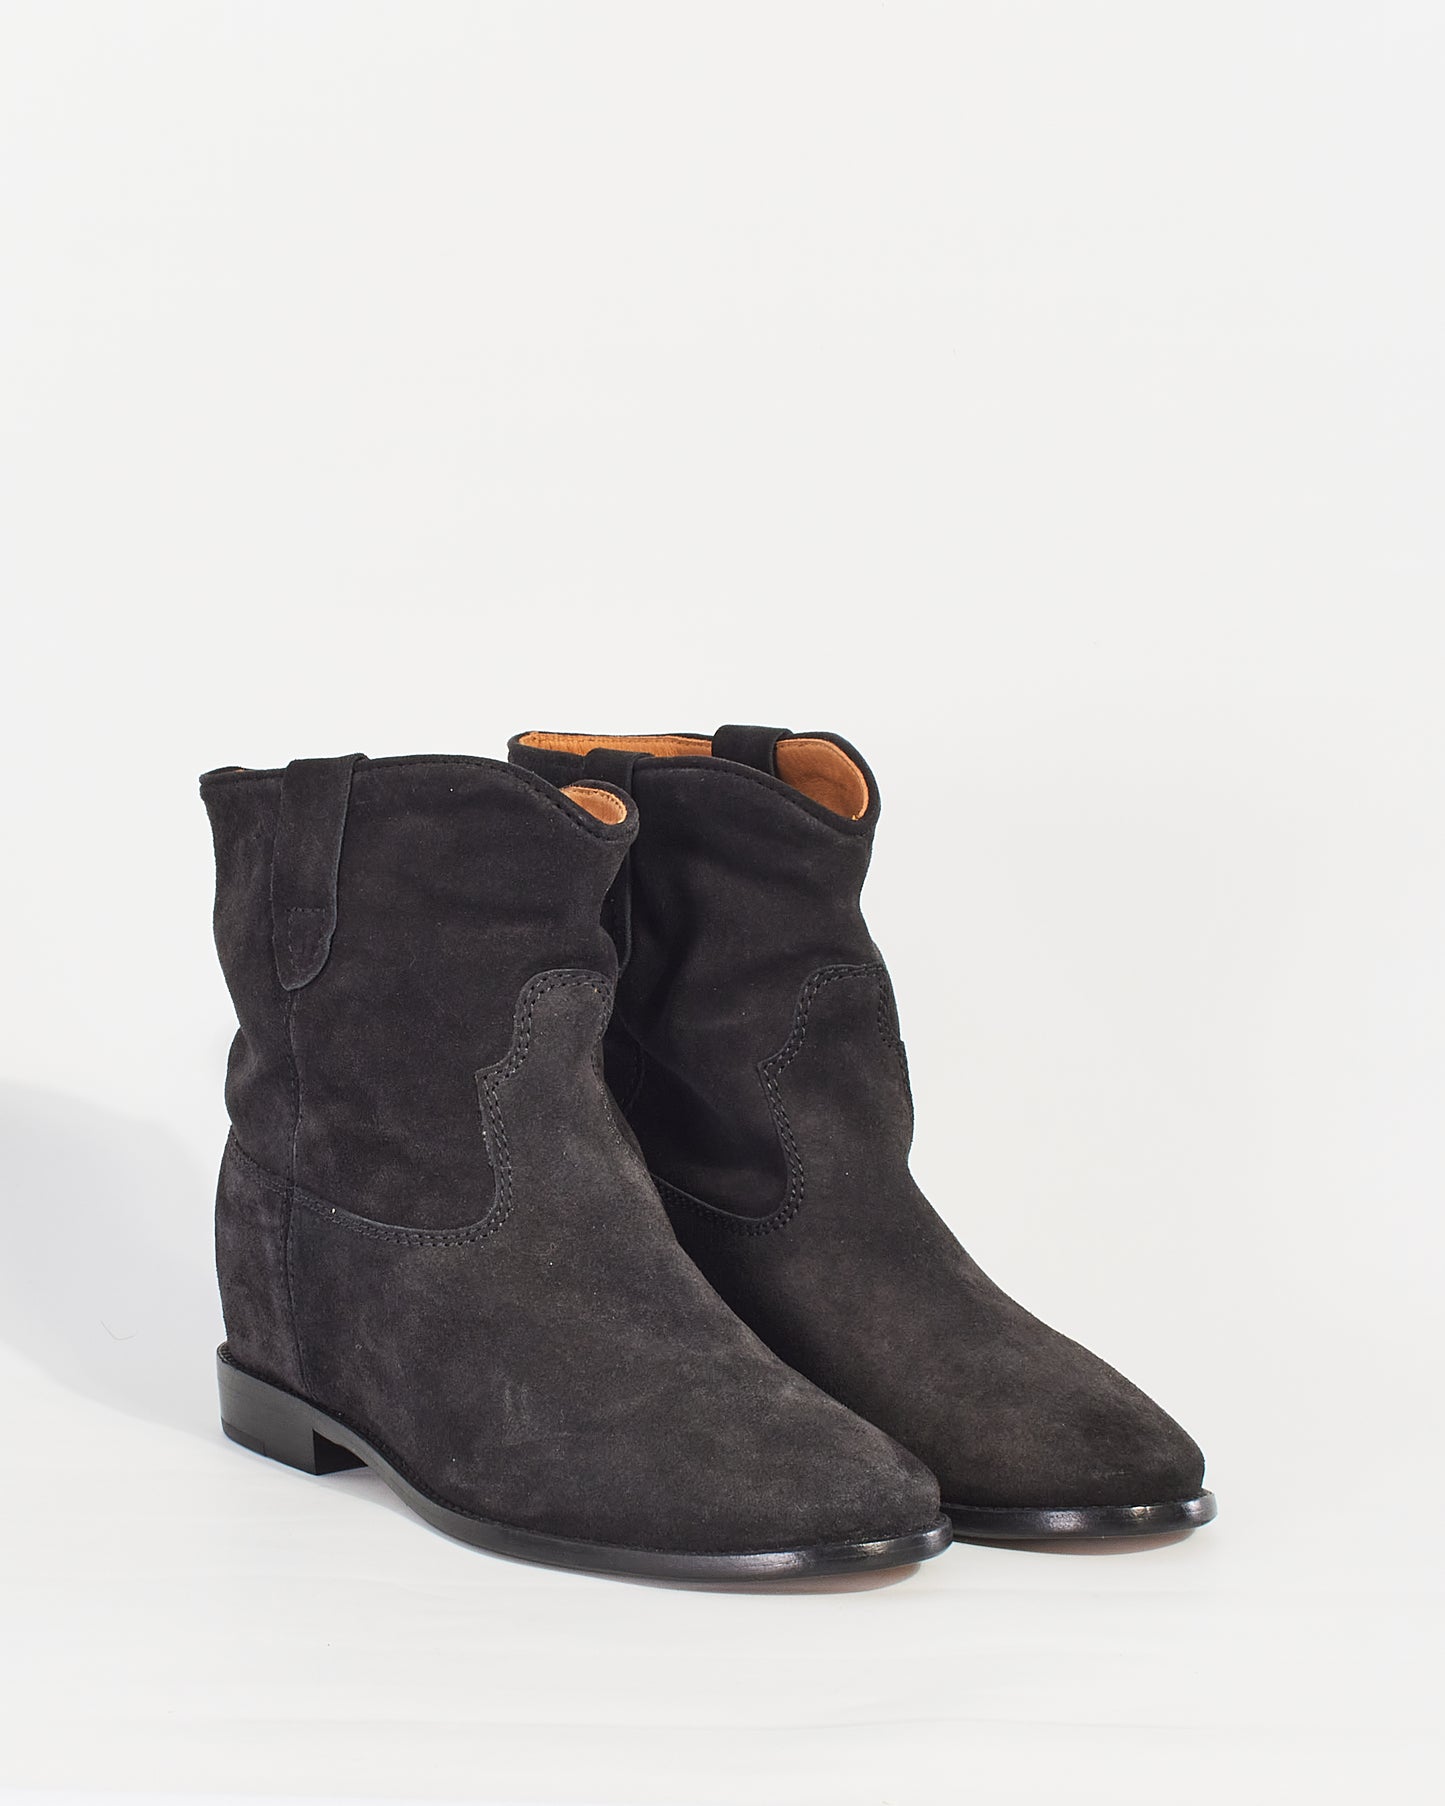 Isabel Marant Black Suede Crisi Boots - 40